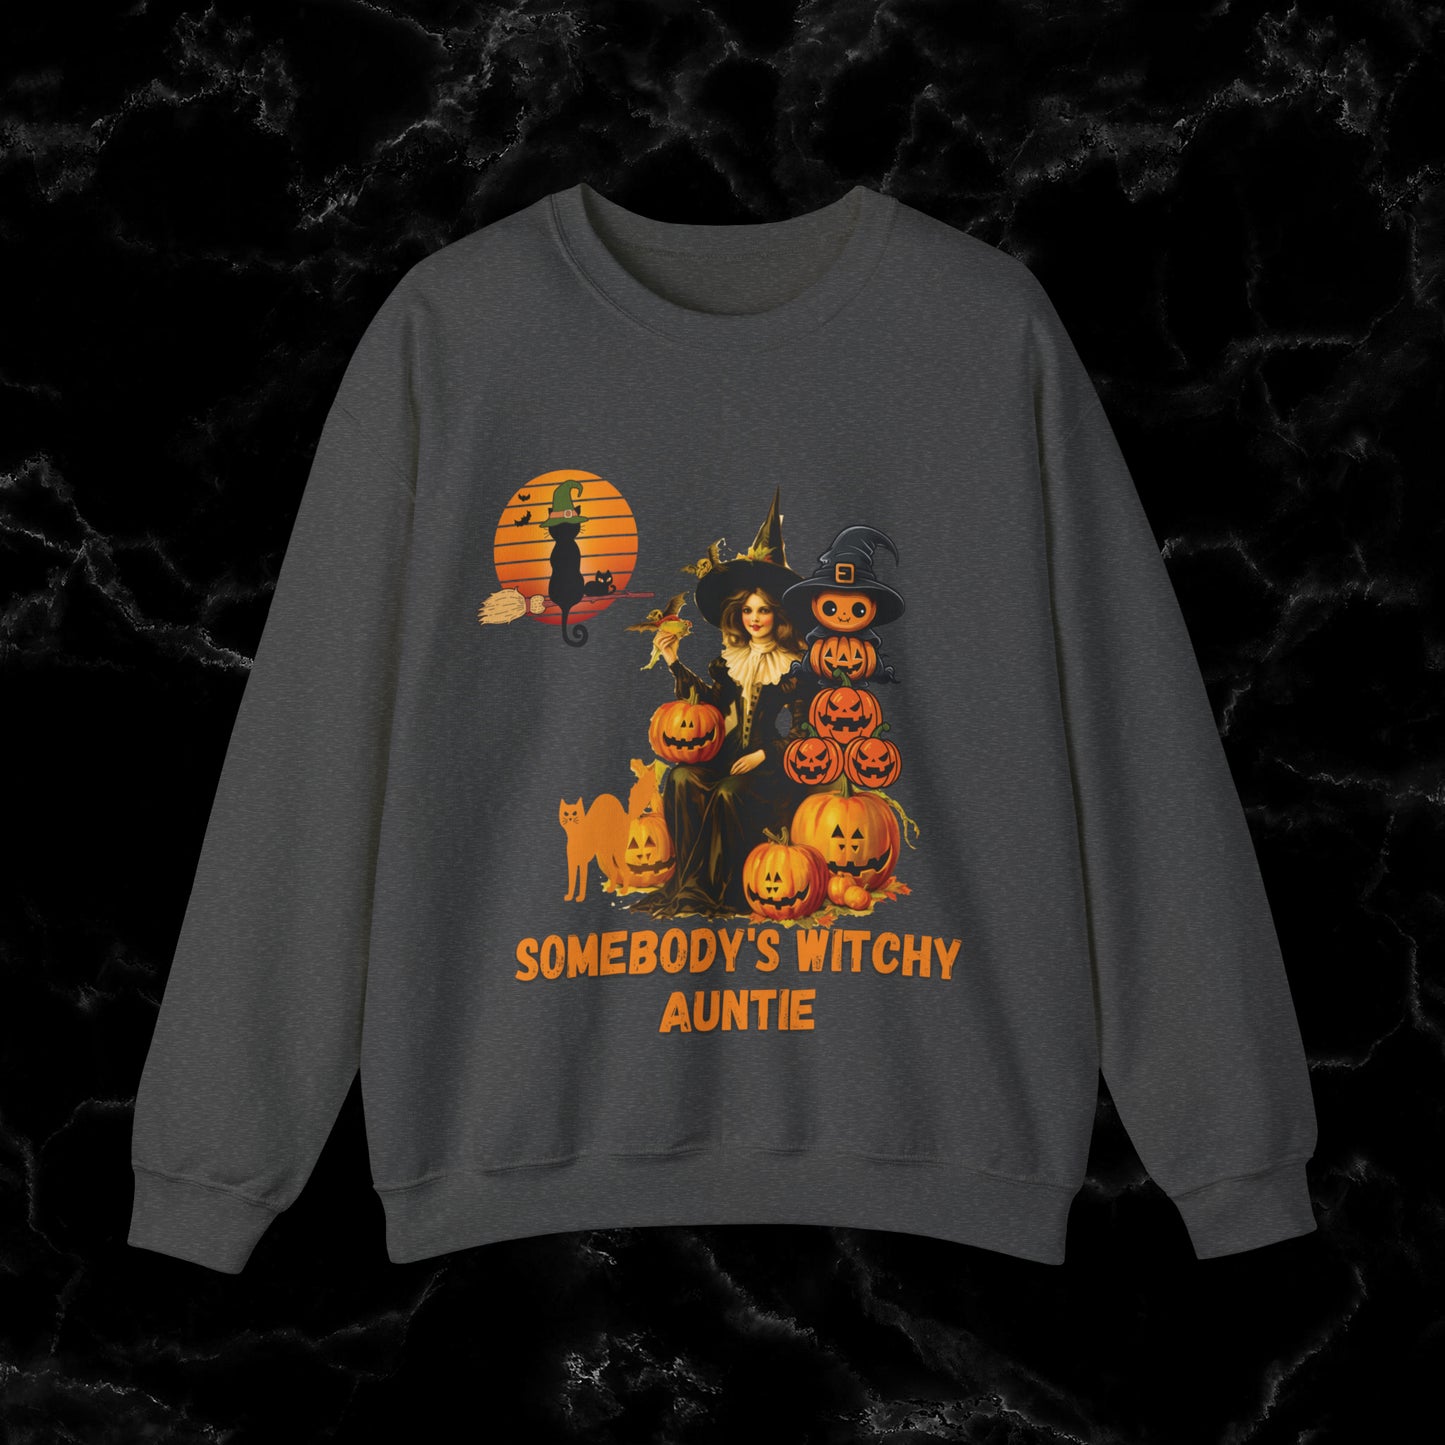 Somebody's Witchy Auntie Sweatshirt - Cool Aunt Shirt for Halloween Sweatshirt S Dark Heather 